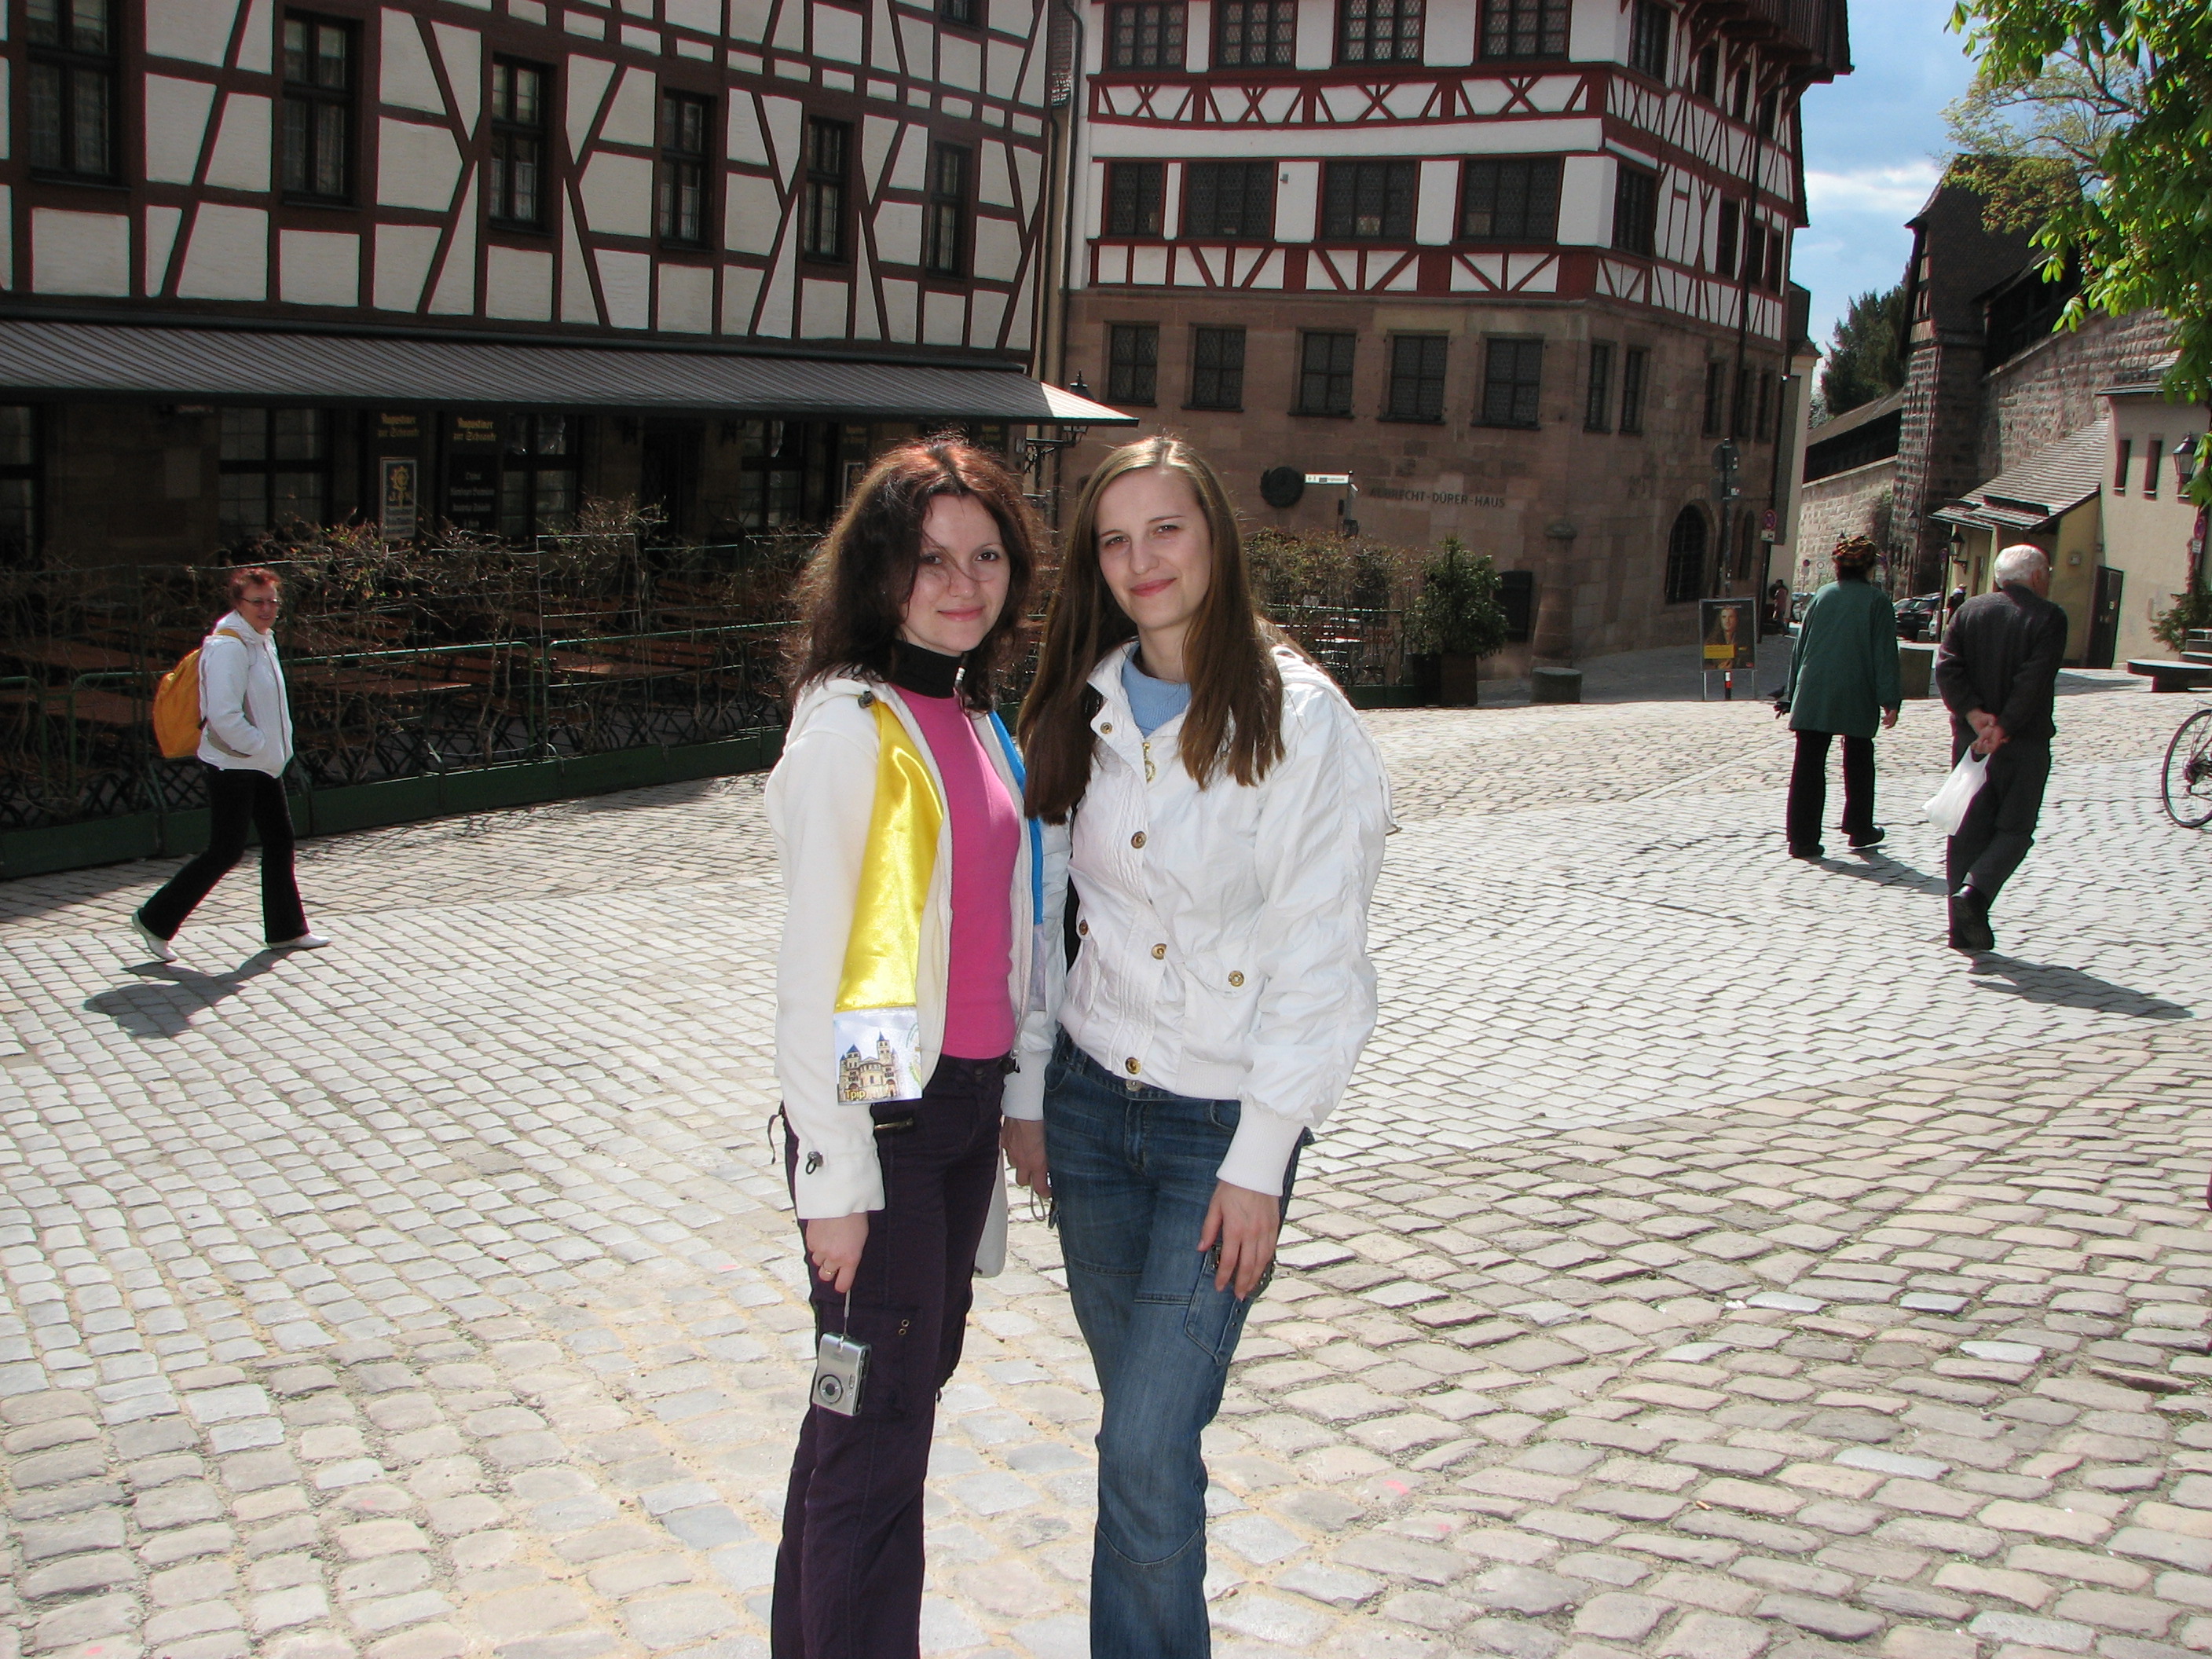 Catholic girls visiting Nuremberg, Germany